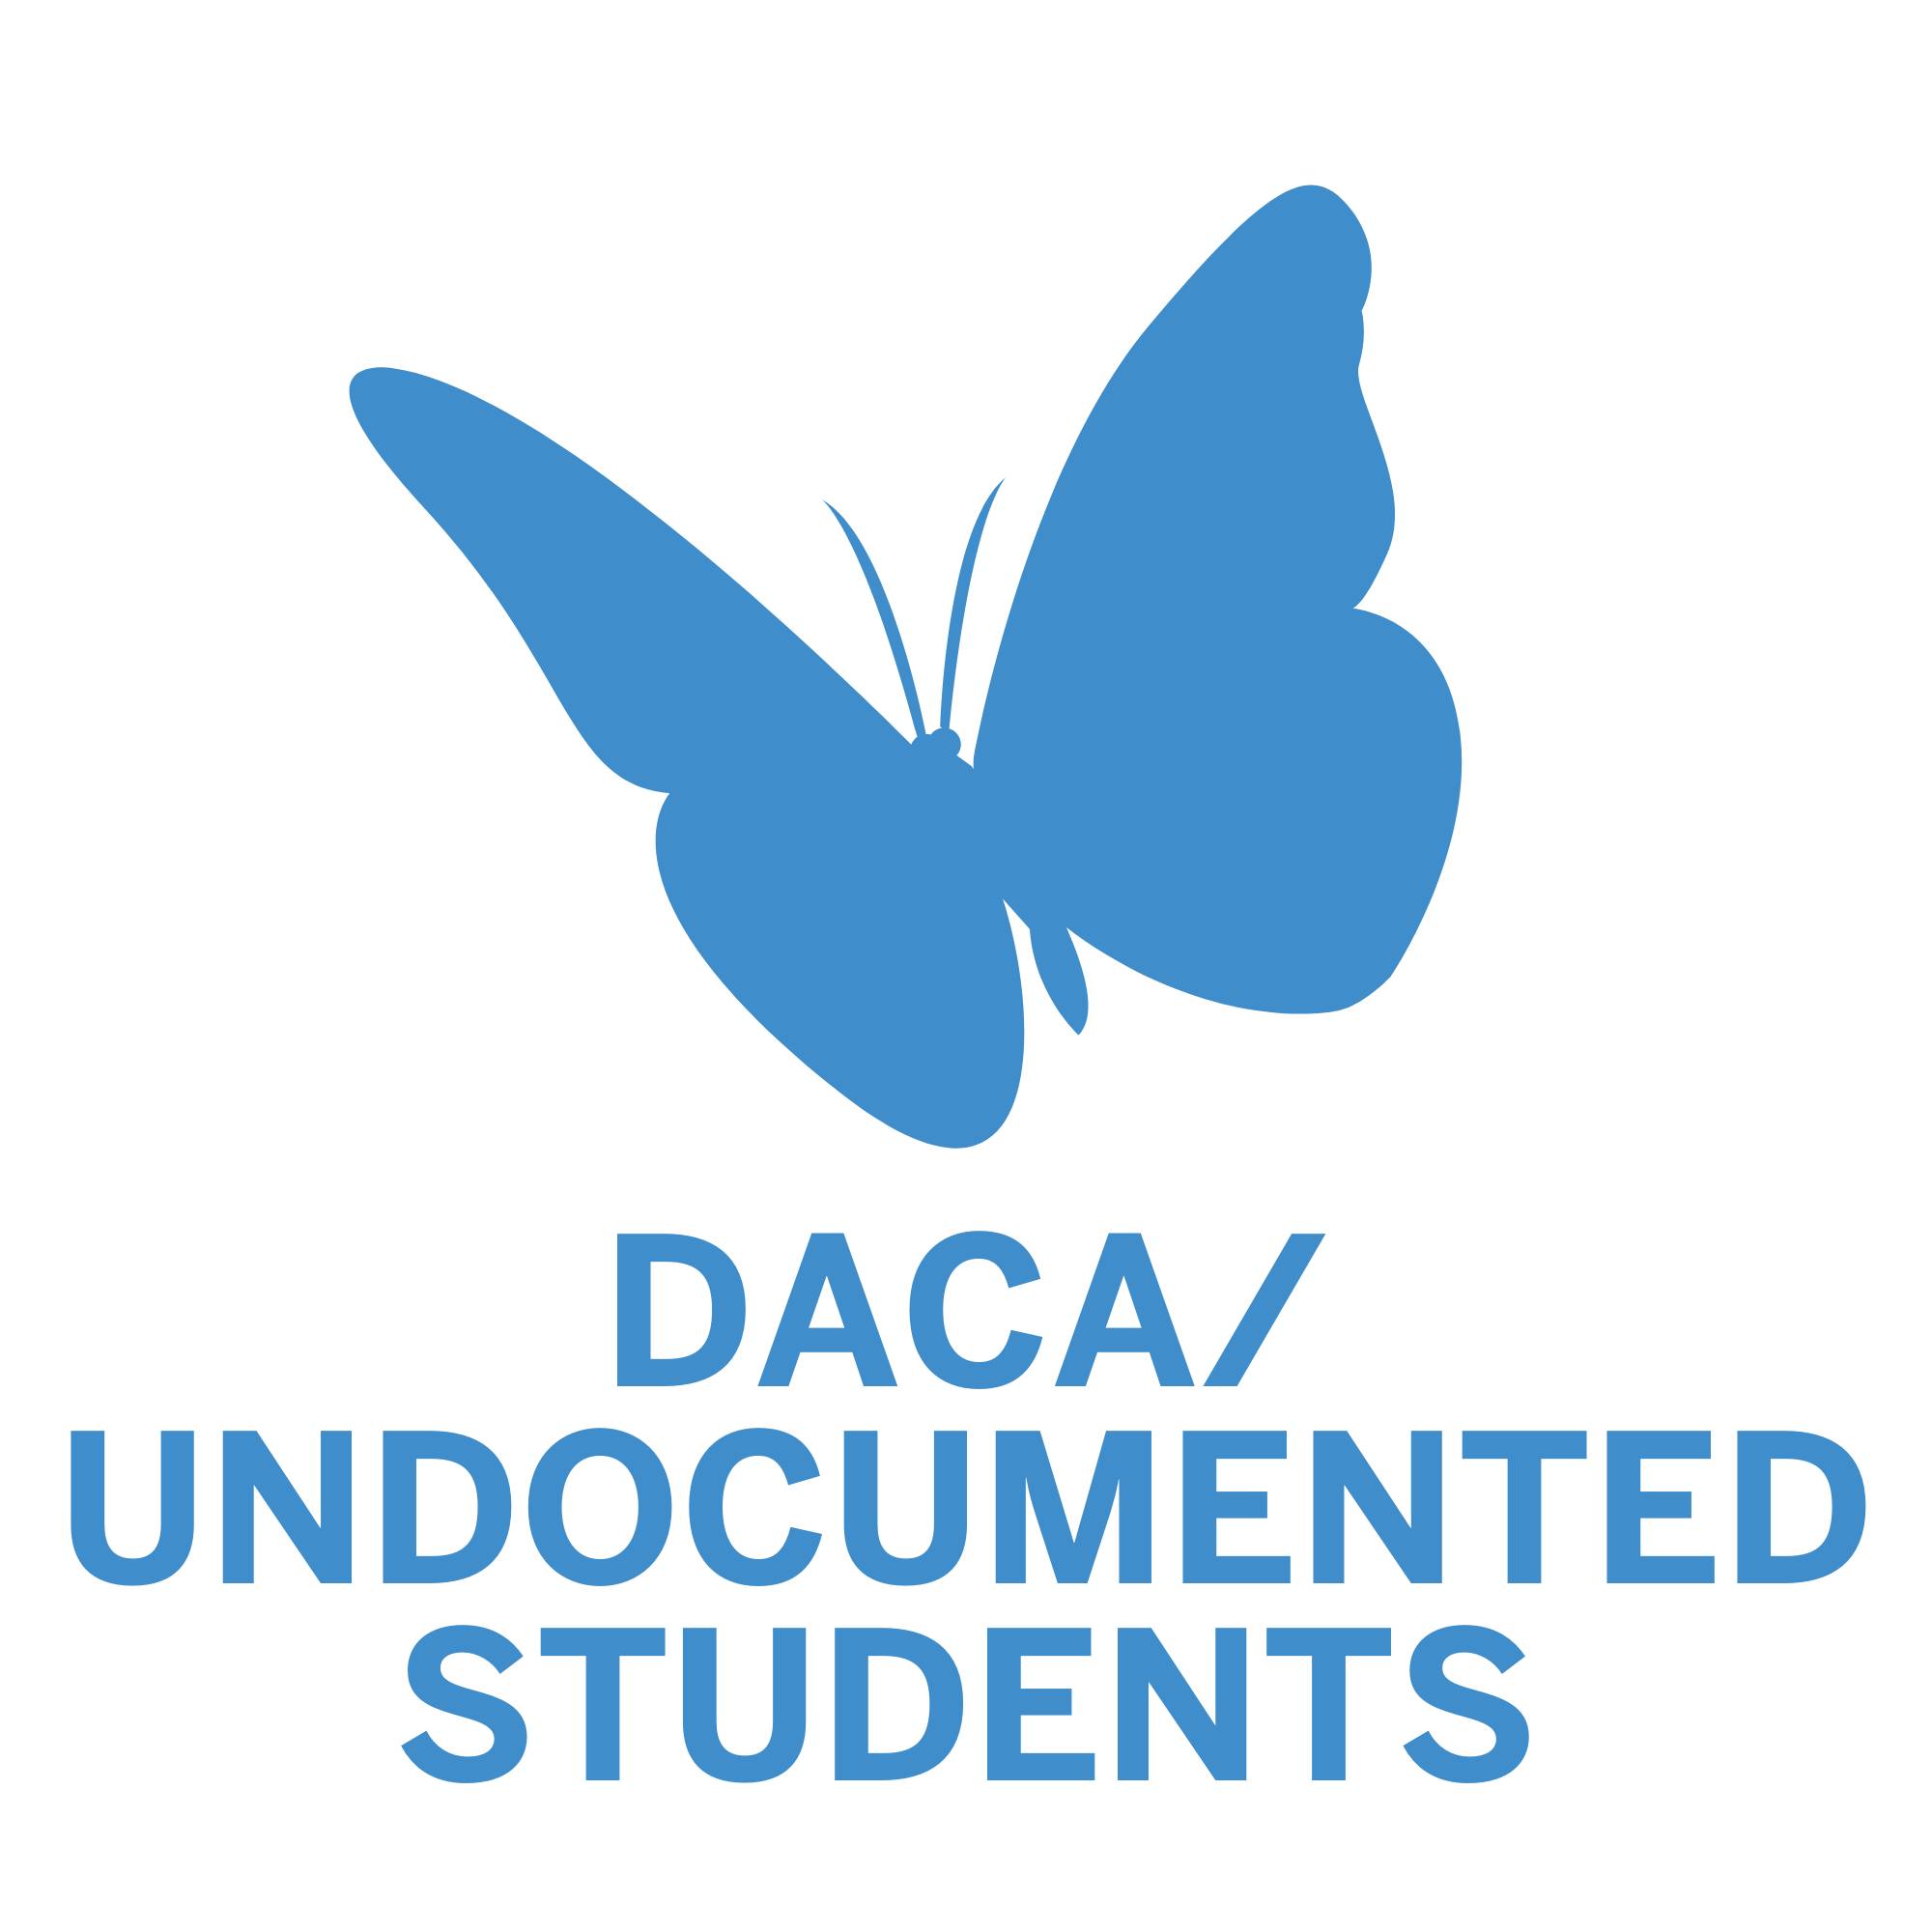 DACA/Undocumented Students